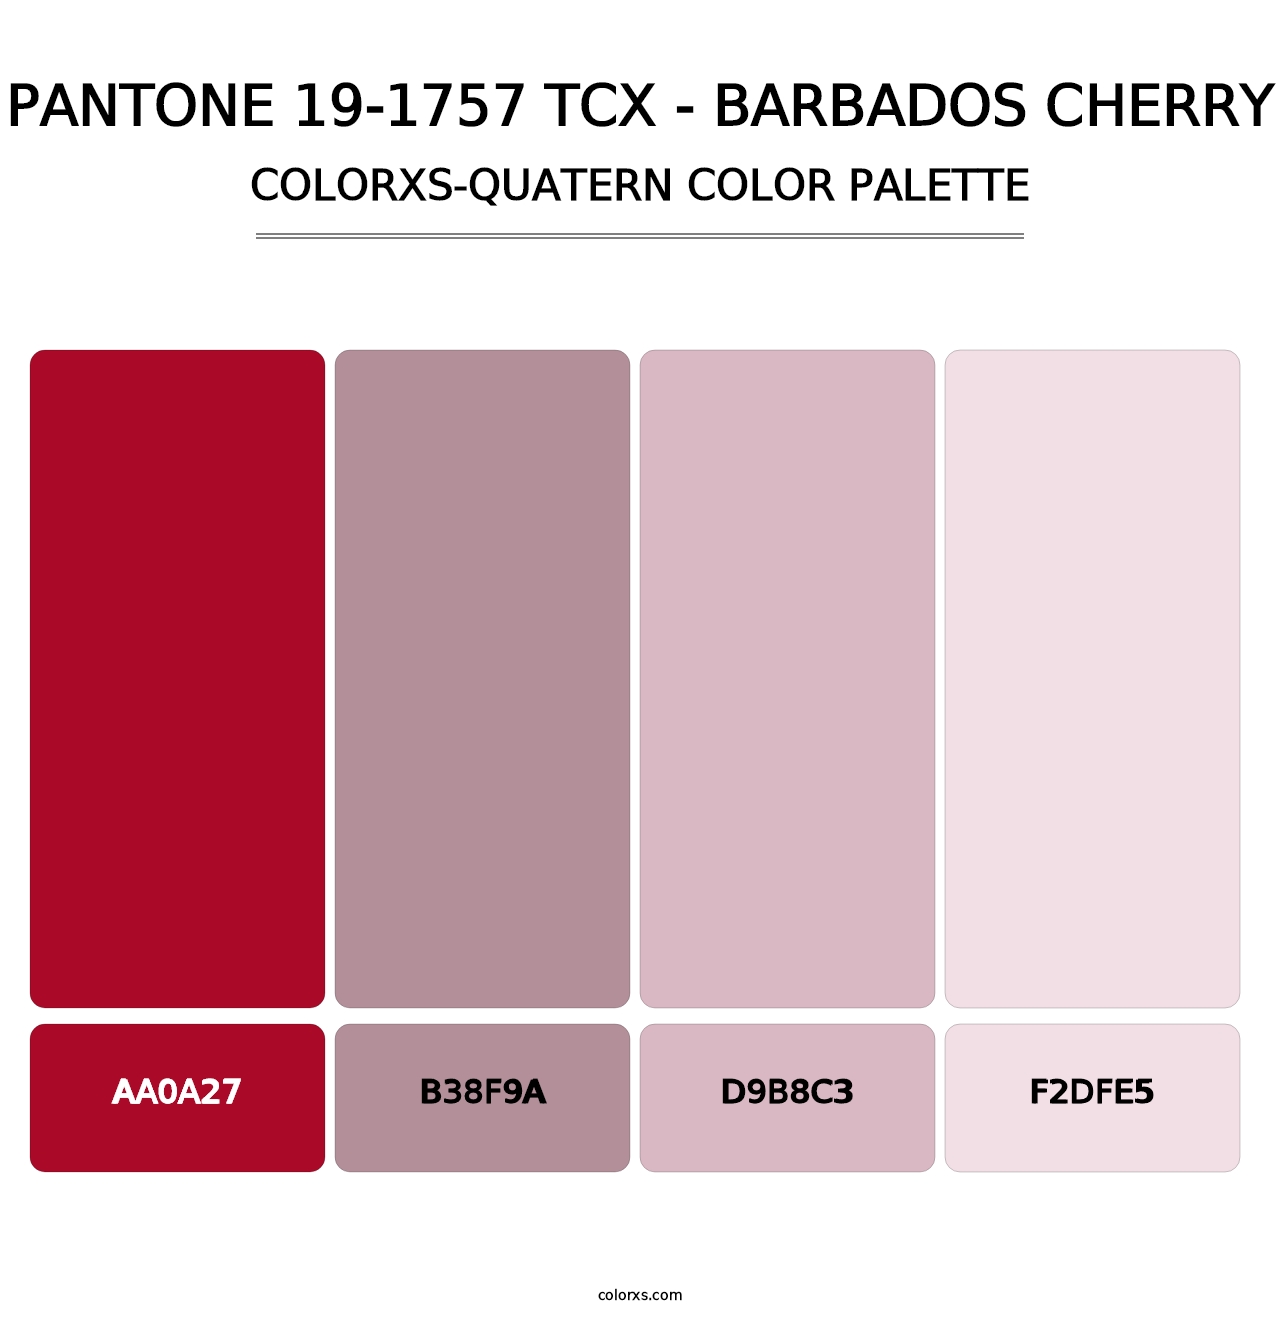 PANTONE 19-1757 TCX - Barbados Cherry - Colorxs Quatern Palette